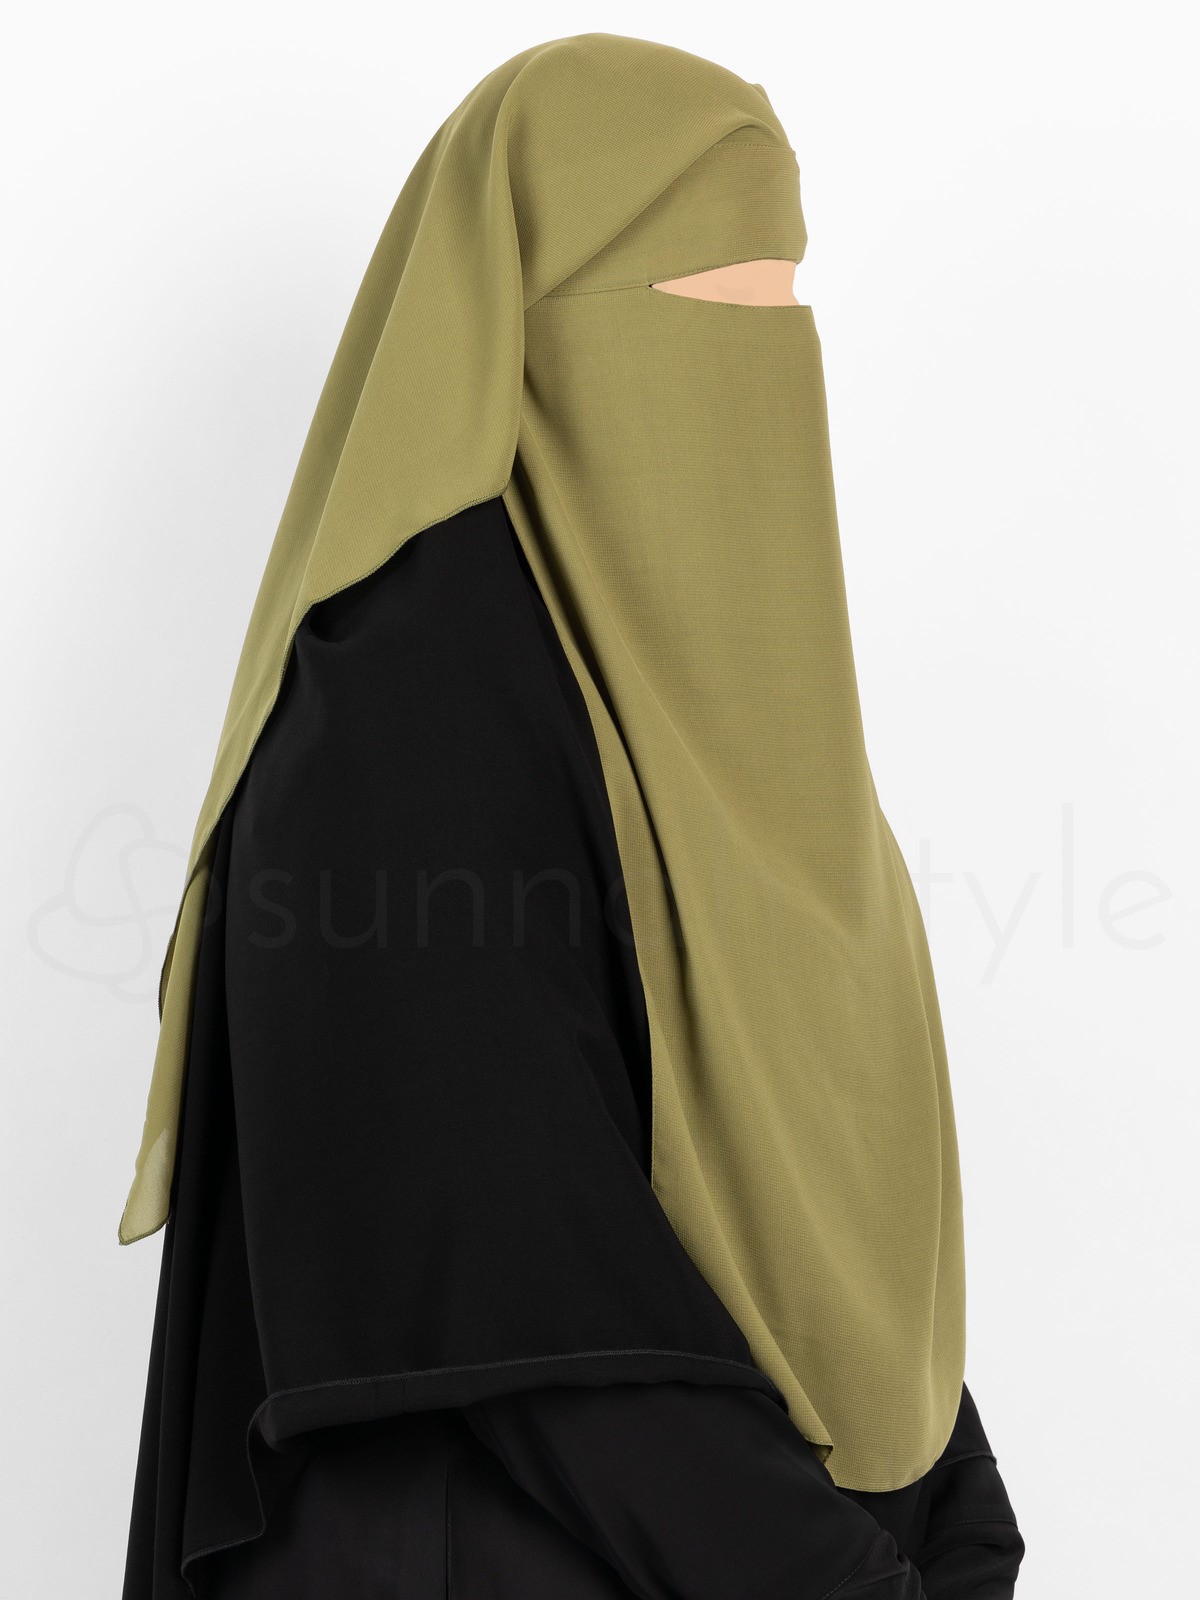 Sunnah Style - Long Two Layer Niqab (Smoke)